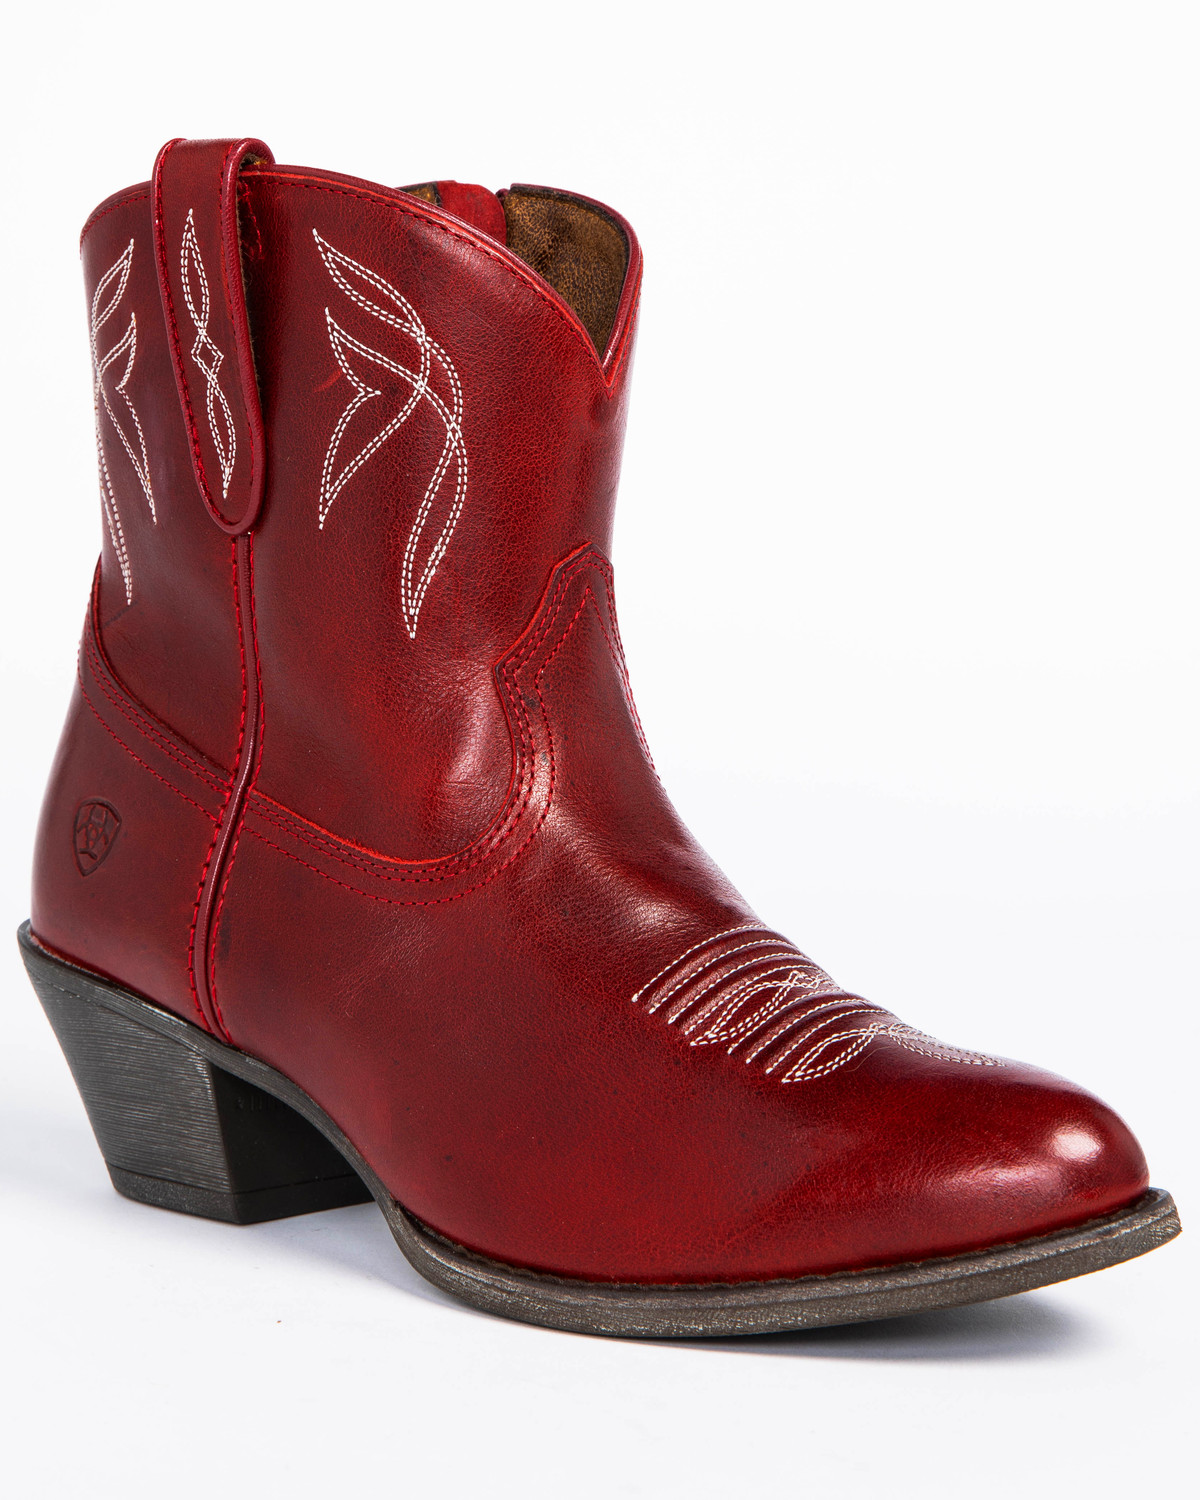 Ariat Women's Darlin Western Fashion Boot 